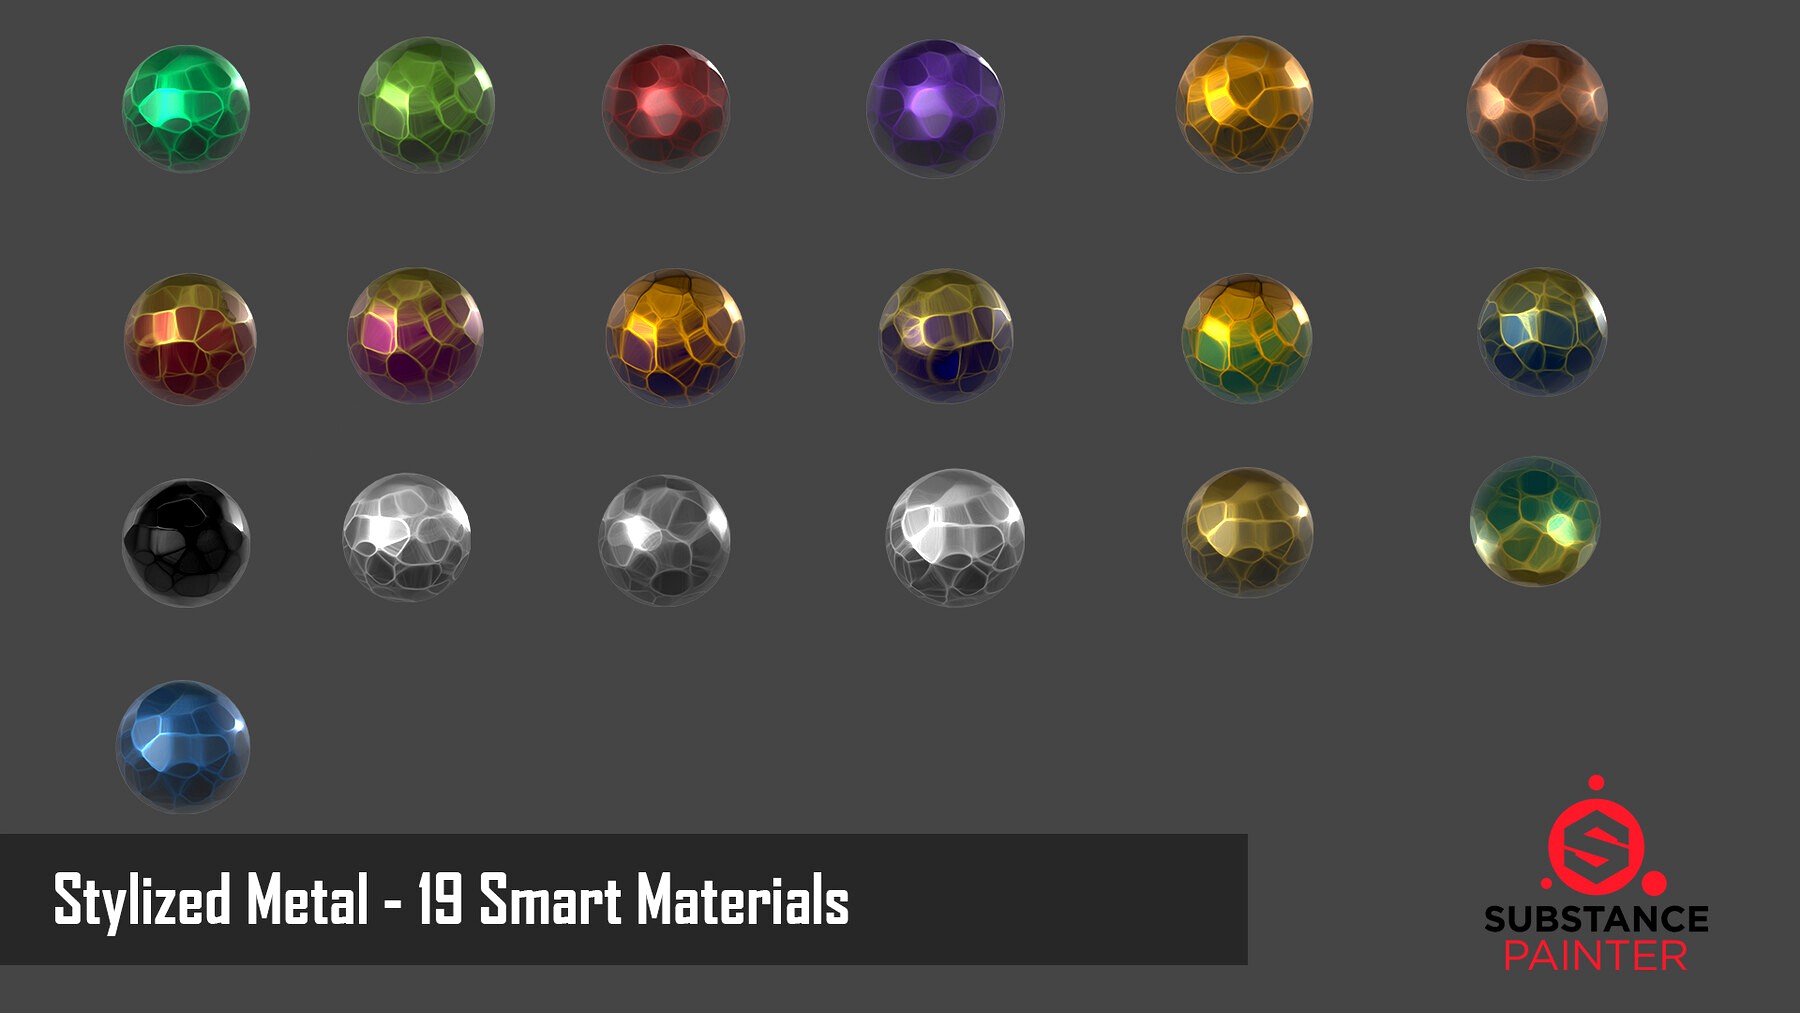 Stylized Metal - 19 Smart Materials